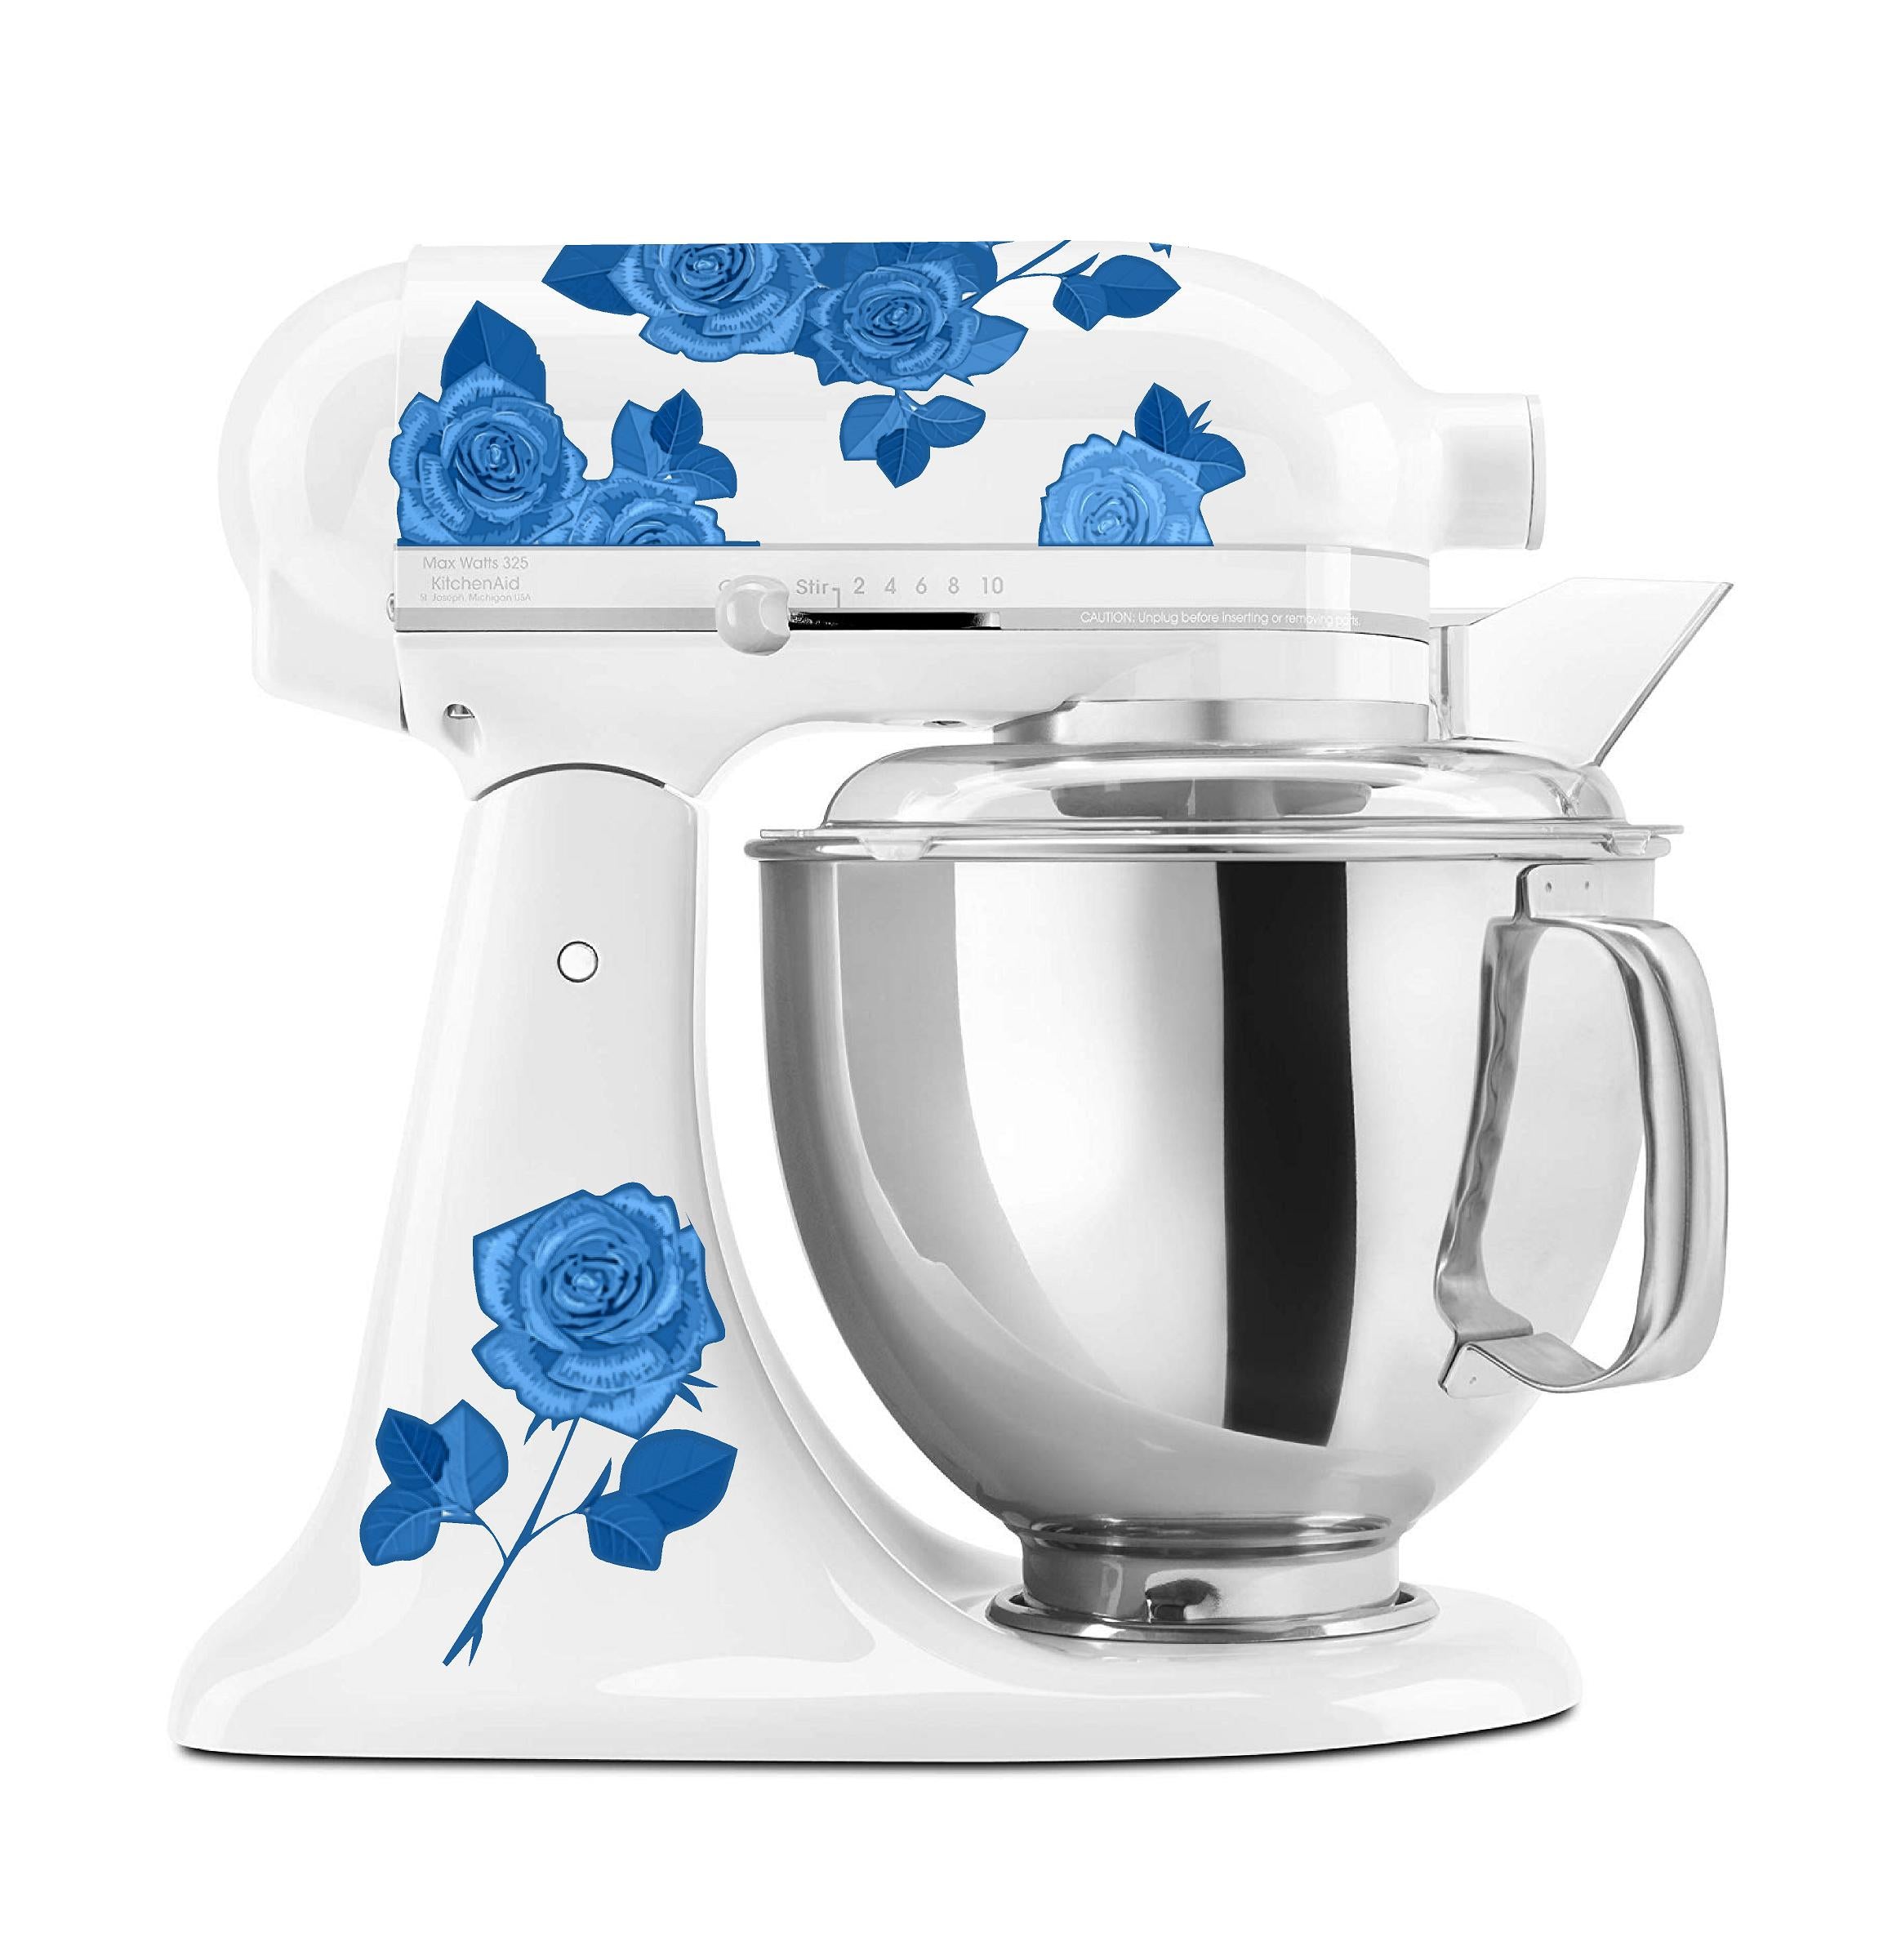 Floral KitchenAid Mixer Decal Sticker| kitchen mixer| mixer tattoo| mixer  upgrade